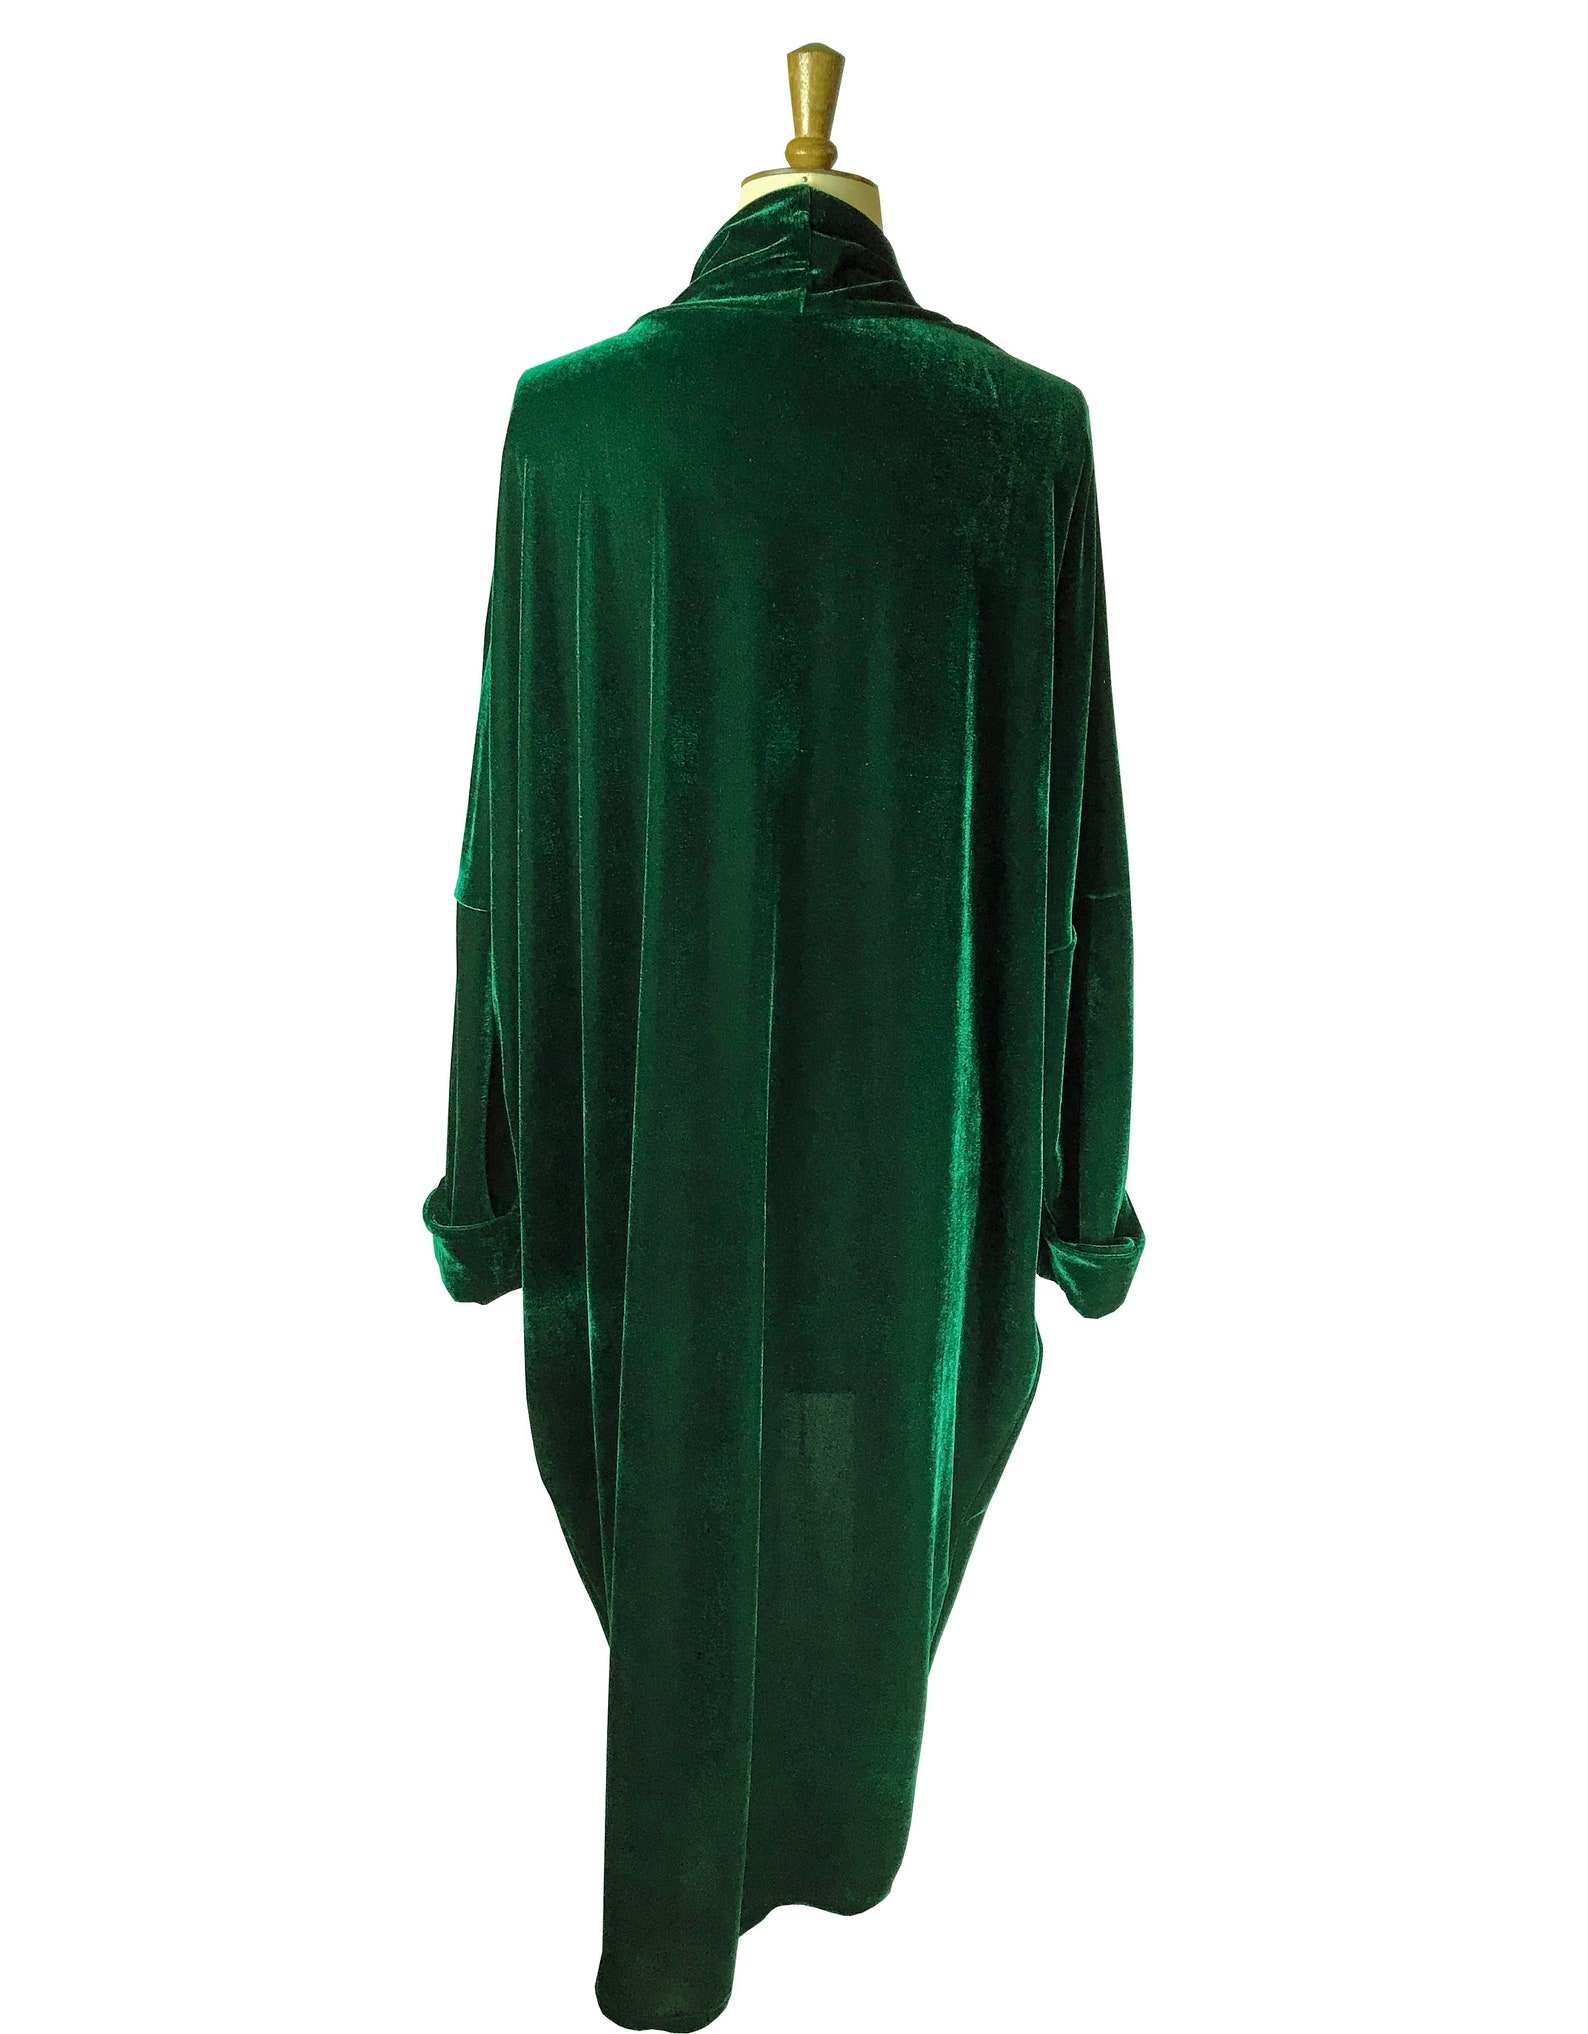 Baylis and Knight Green Velvet Opera Coat | Etsy